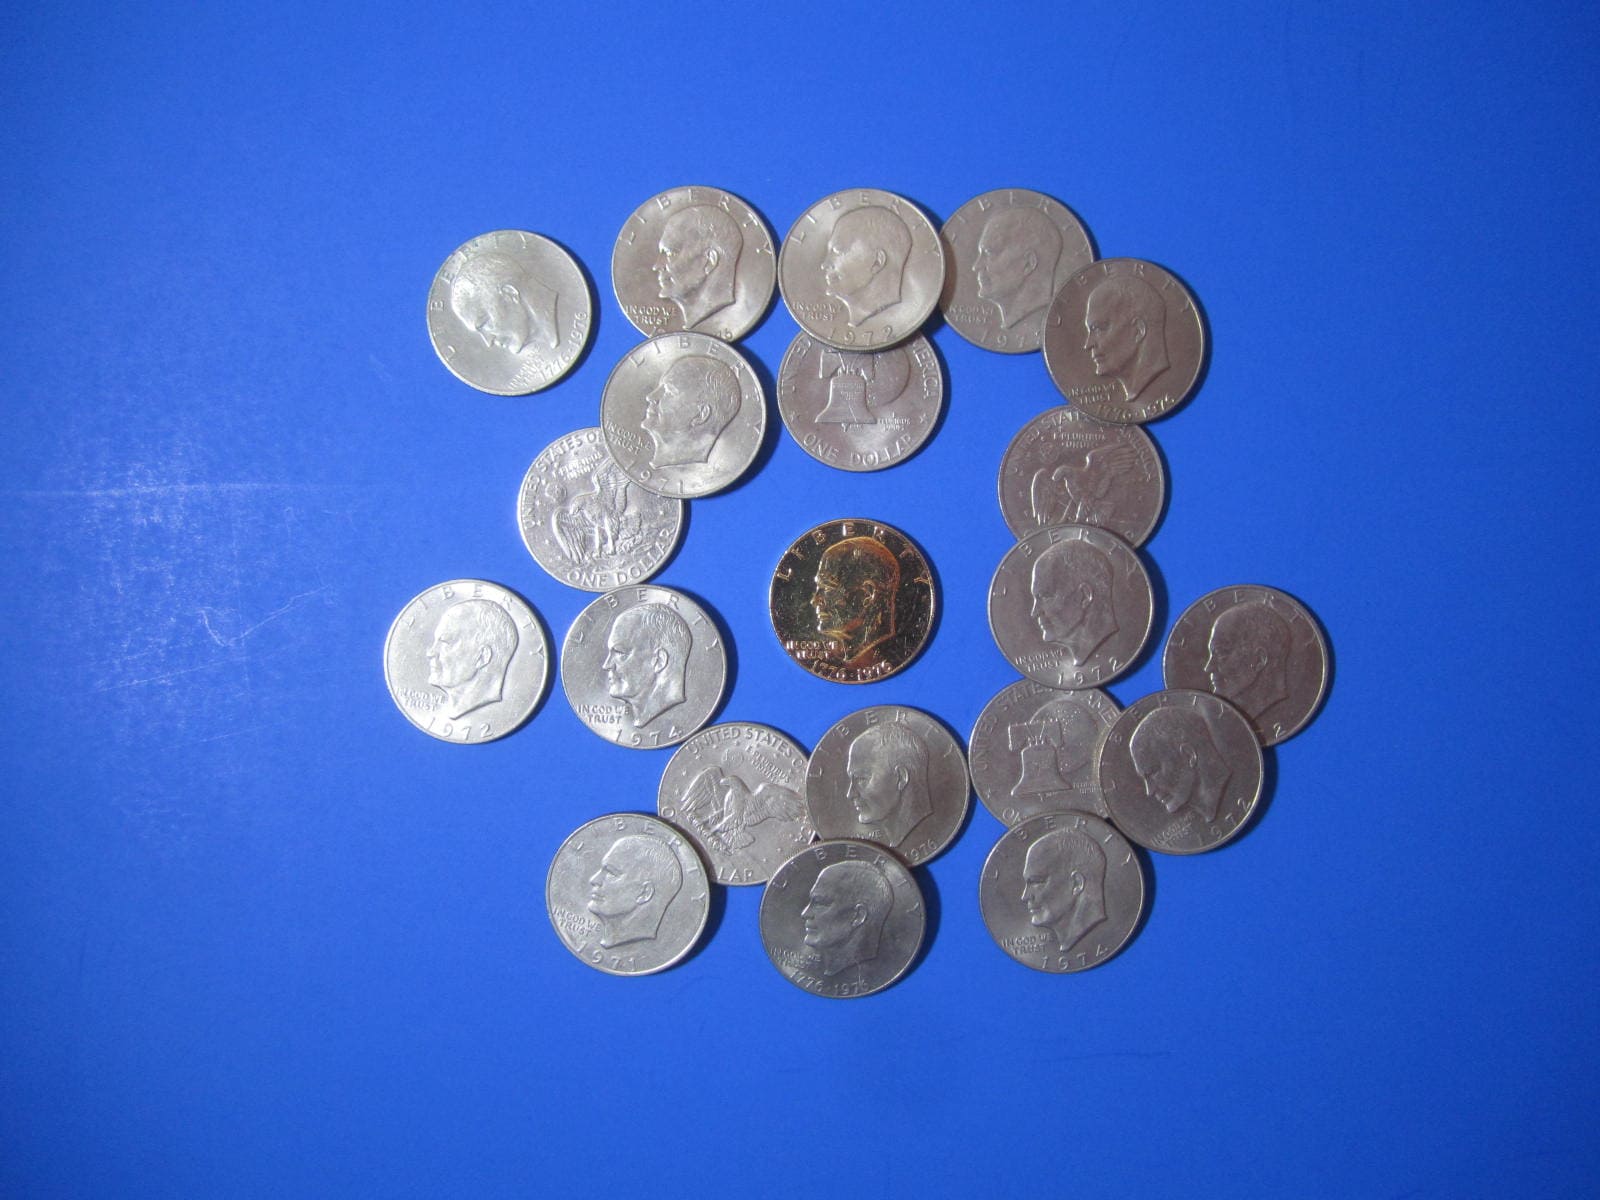 Eisenhower Dollar Coins (the big ones)